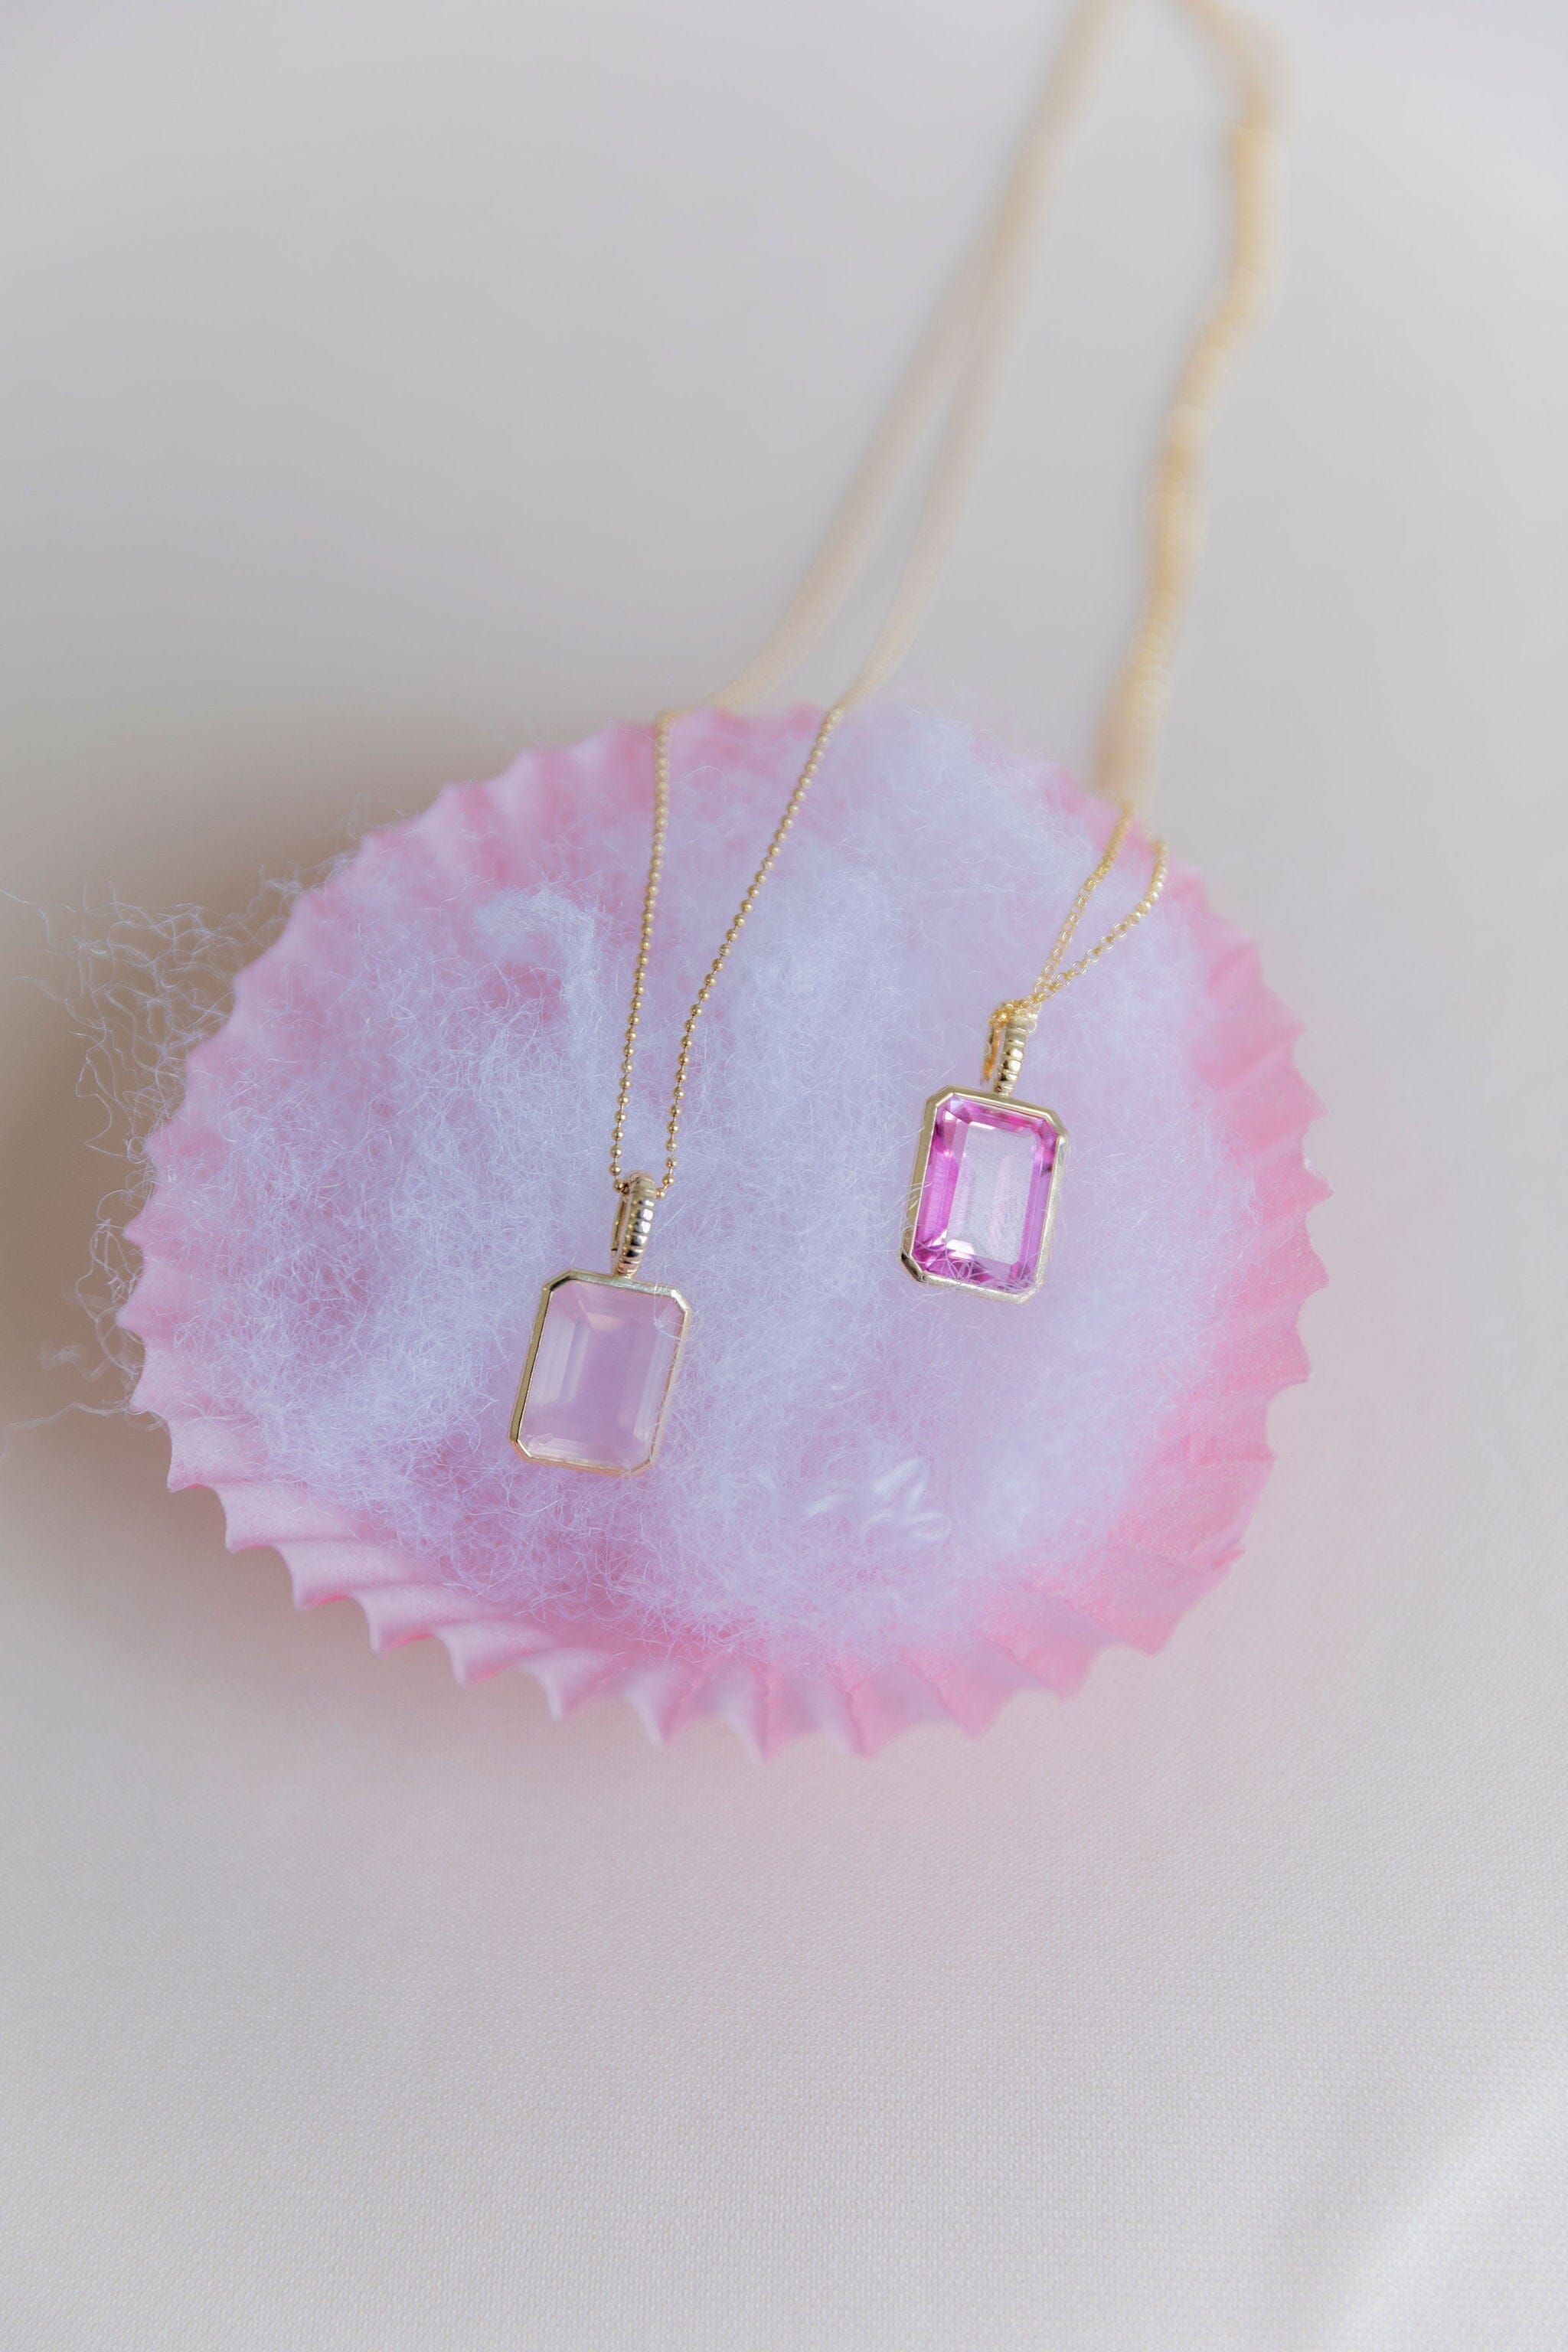 Pink Topaz Emerald Cut DETACHABLE Jollie Pendant & Chain Necklaces - BONDEYE JEWELRY ®